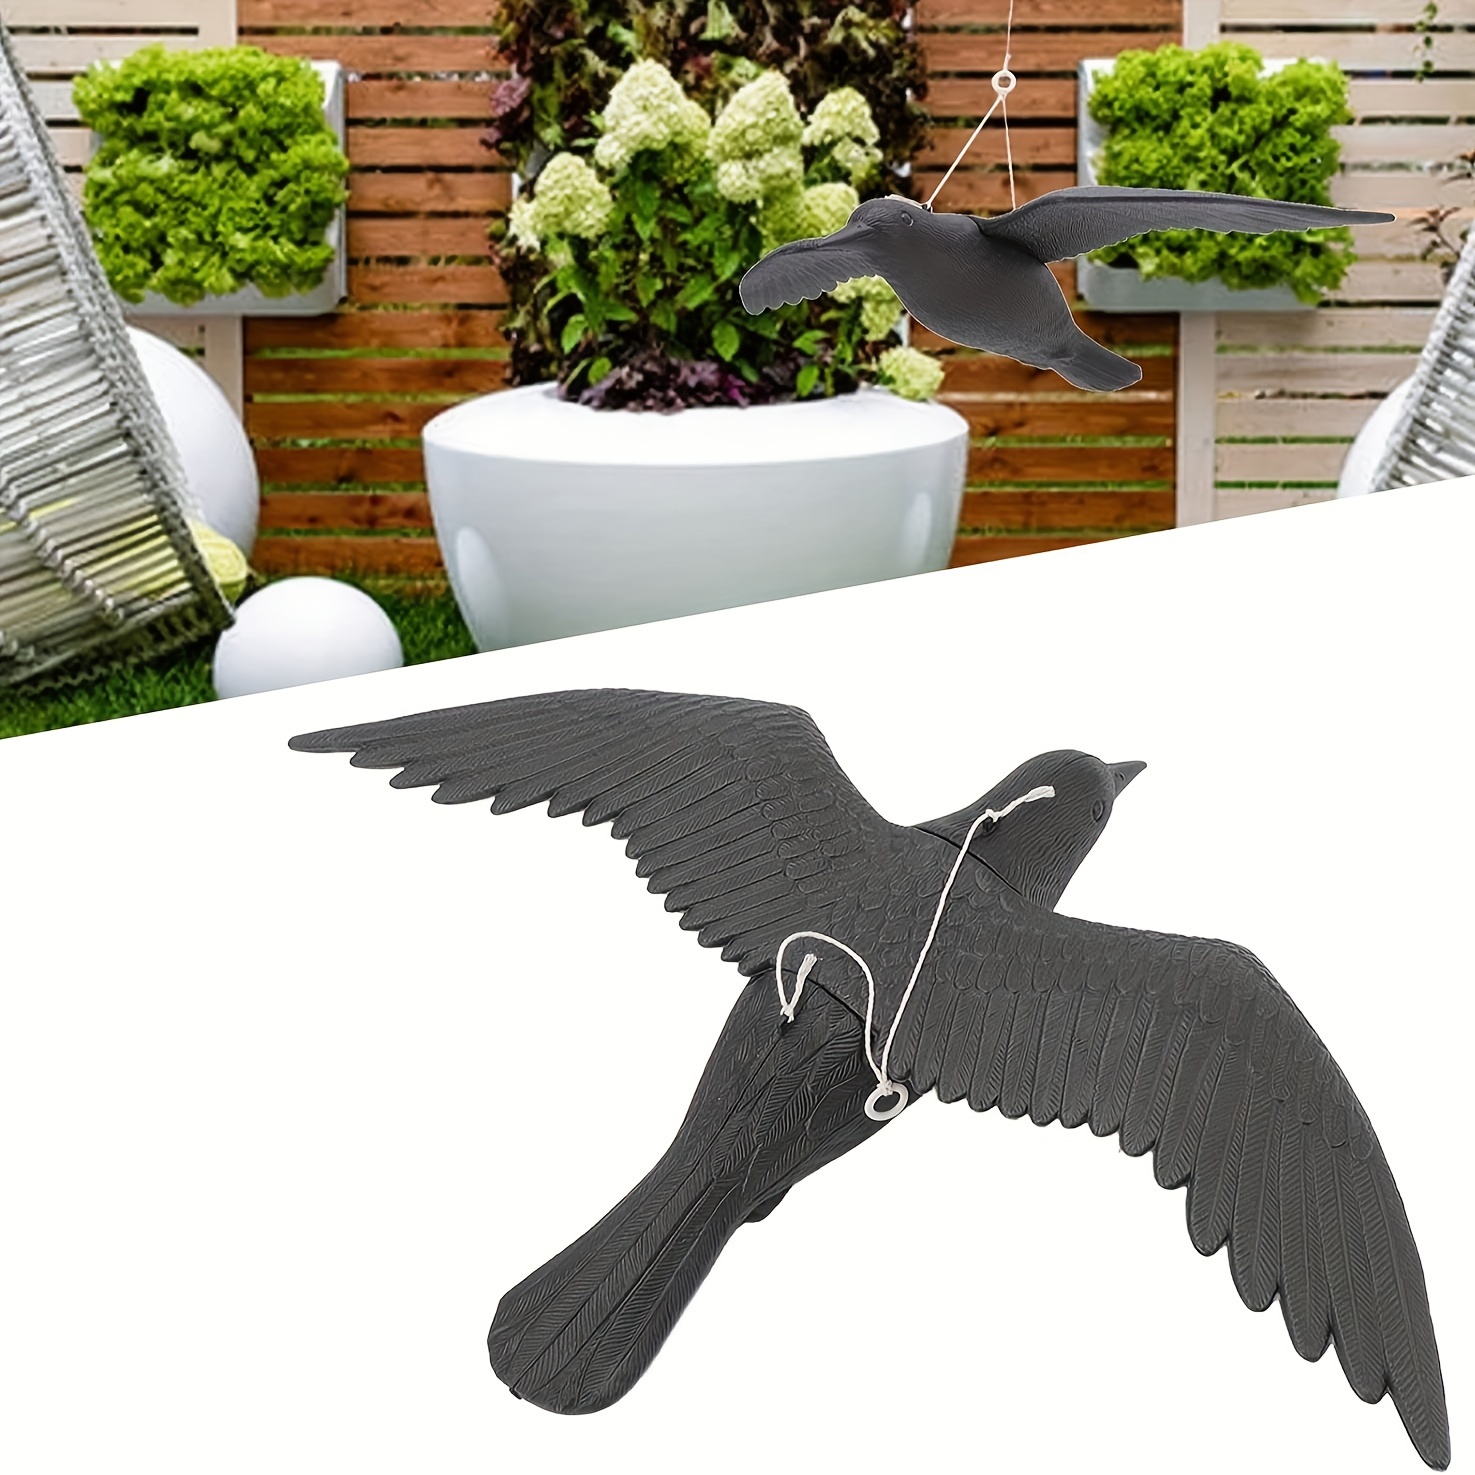 

1pc Crow Decoy - Fake Black Crow Decoy For Attracting Crows, Hunting, Scaring Birds, Halloween Decoration - Yard, Garden, Deck, Patio